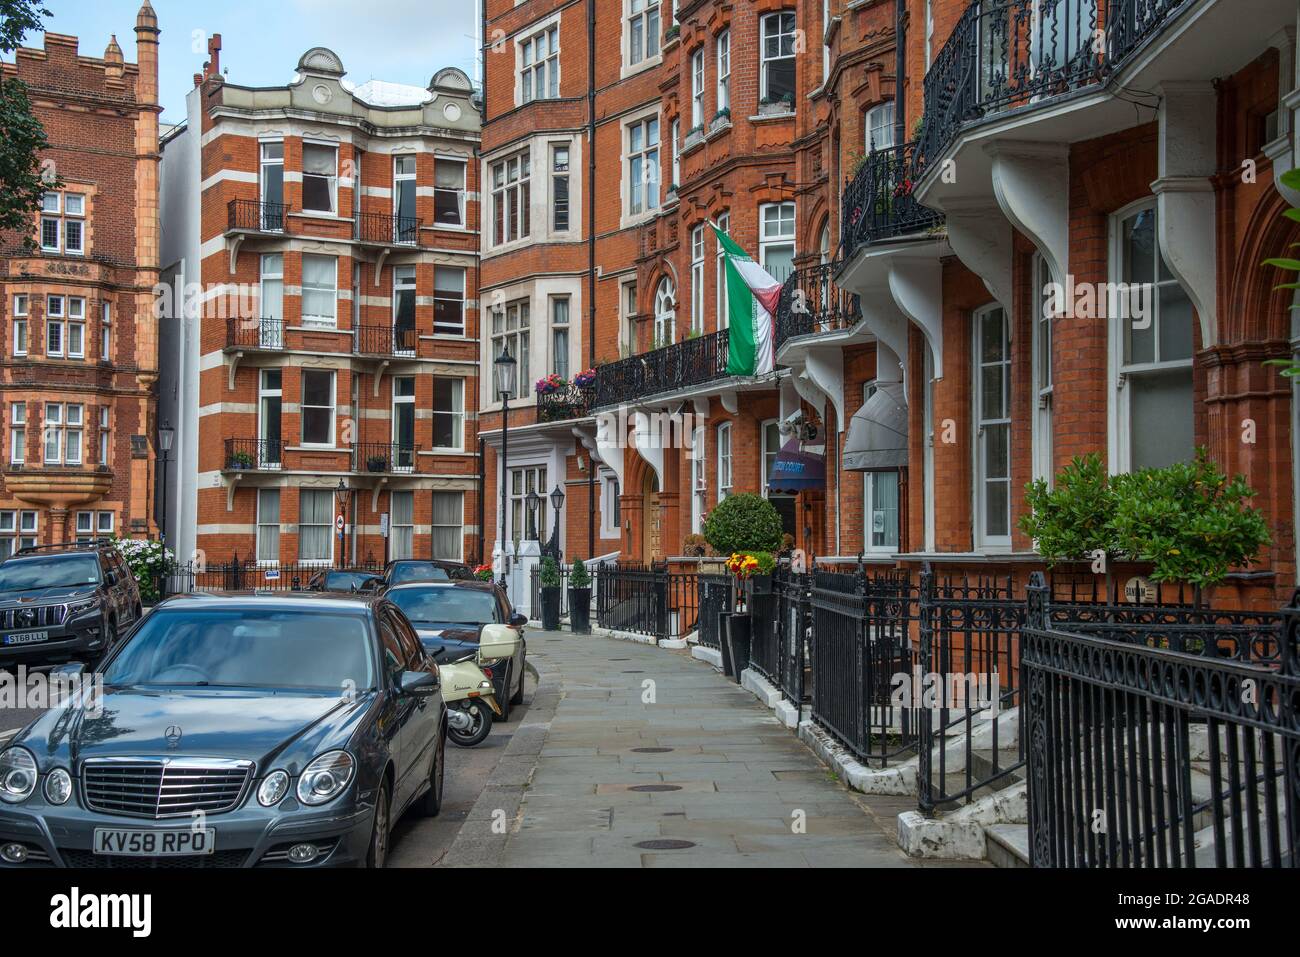 Kensington Court, South Kensington showing Embassy Flags Stock Photo